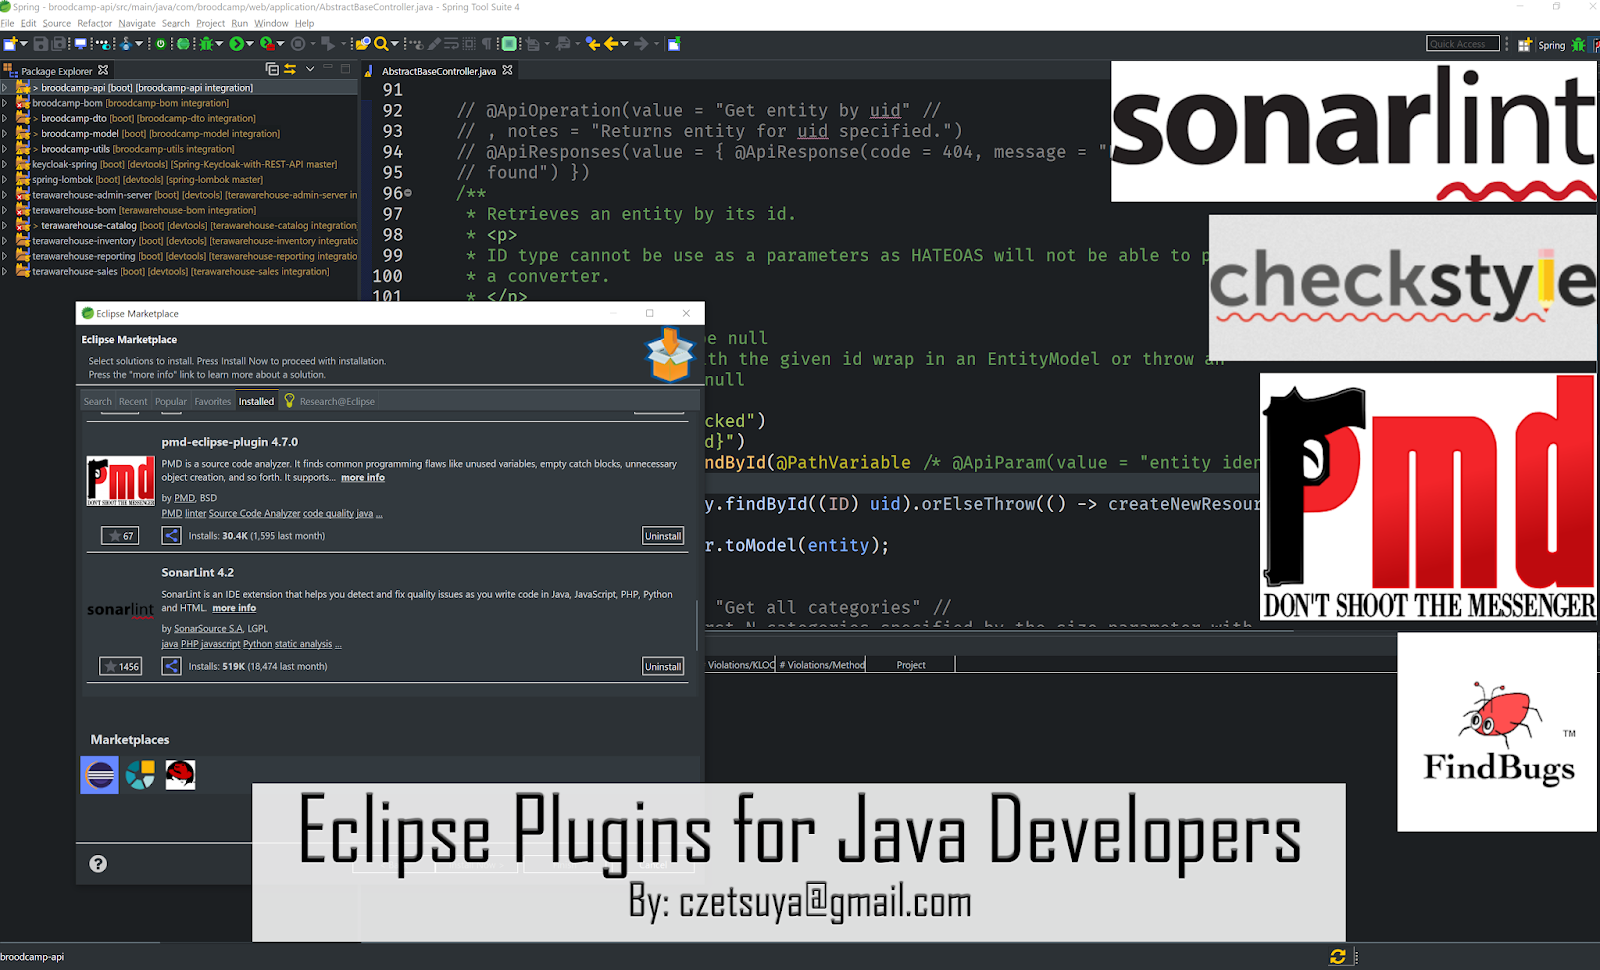 Eclipse Plugins for Java Developer czetsuya's tech